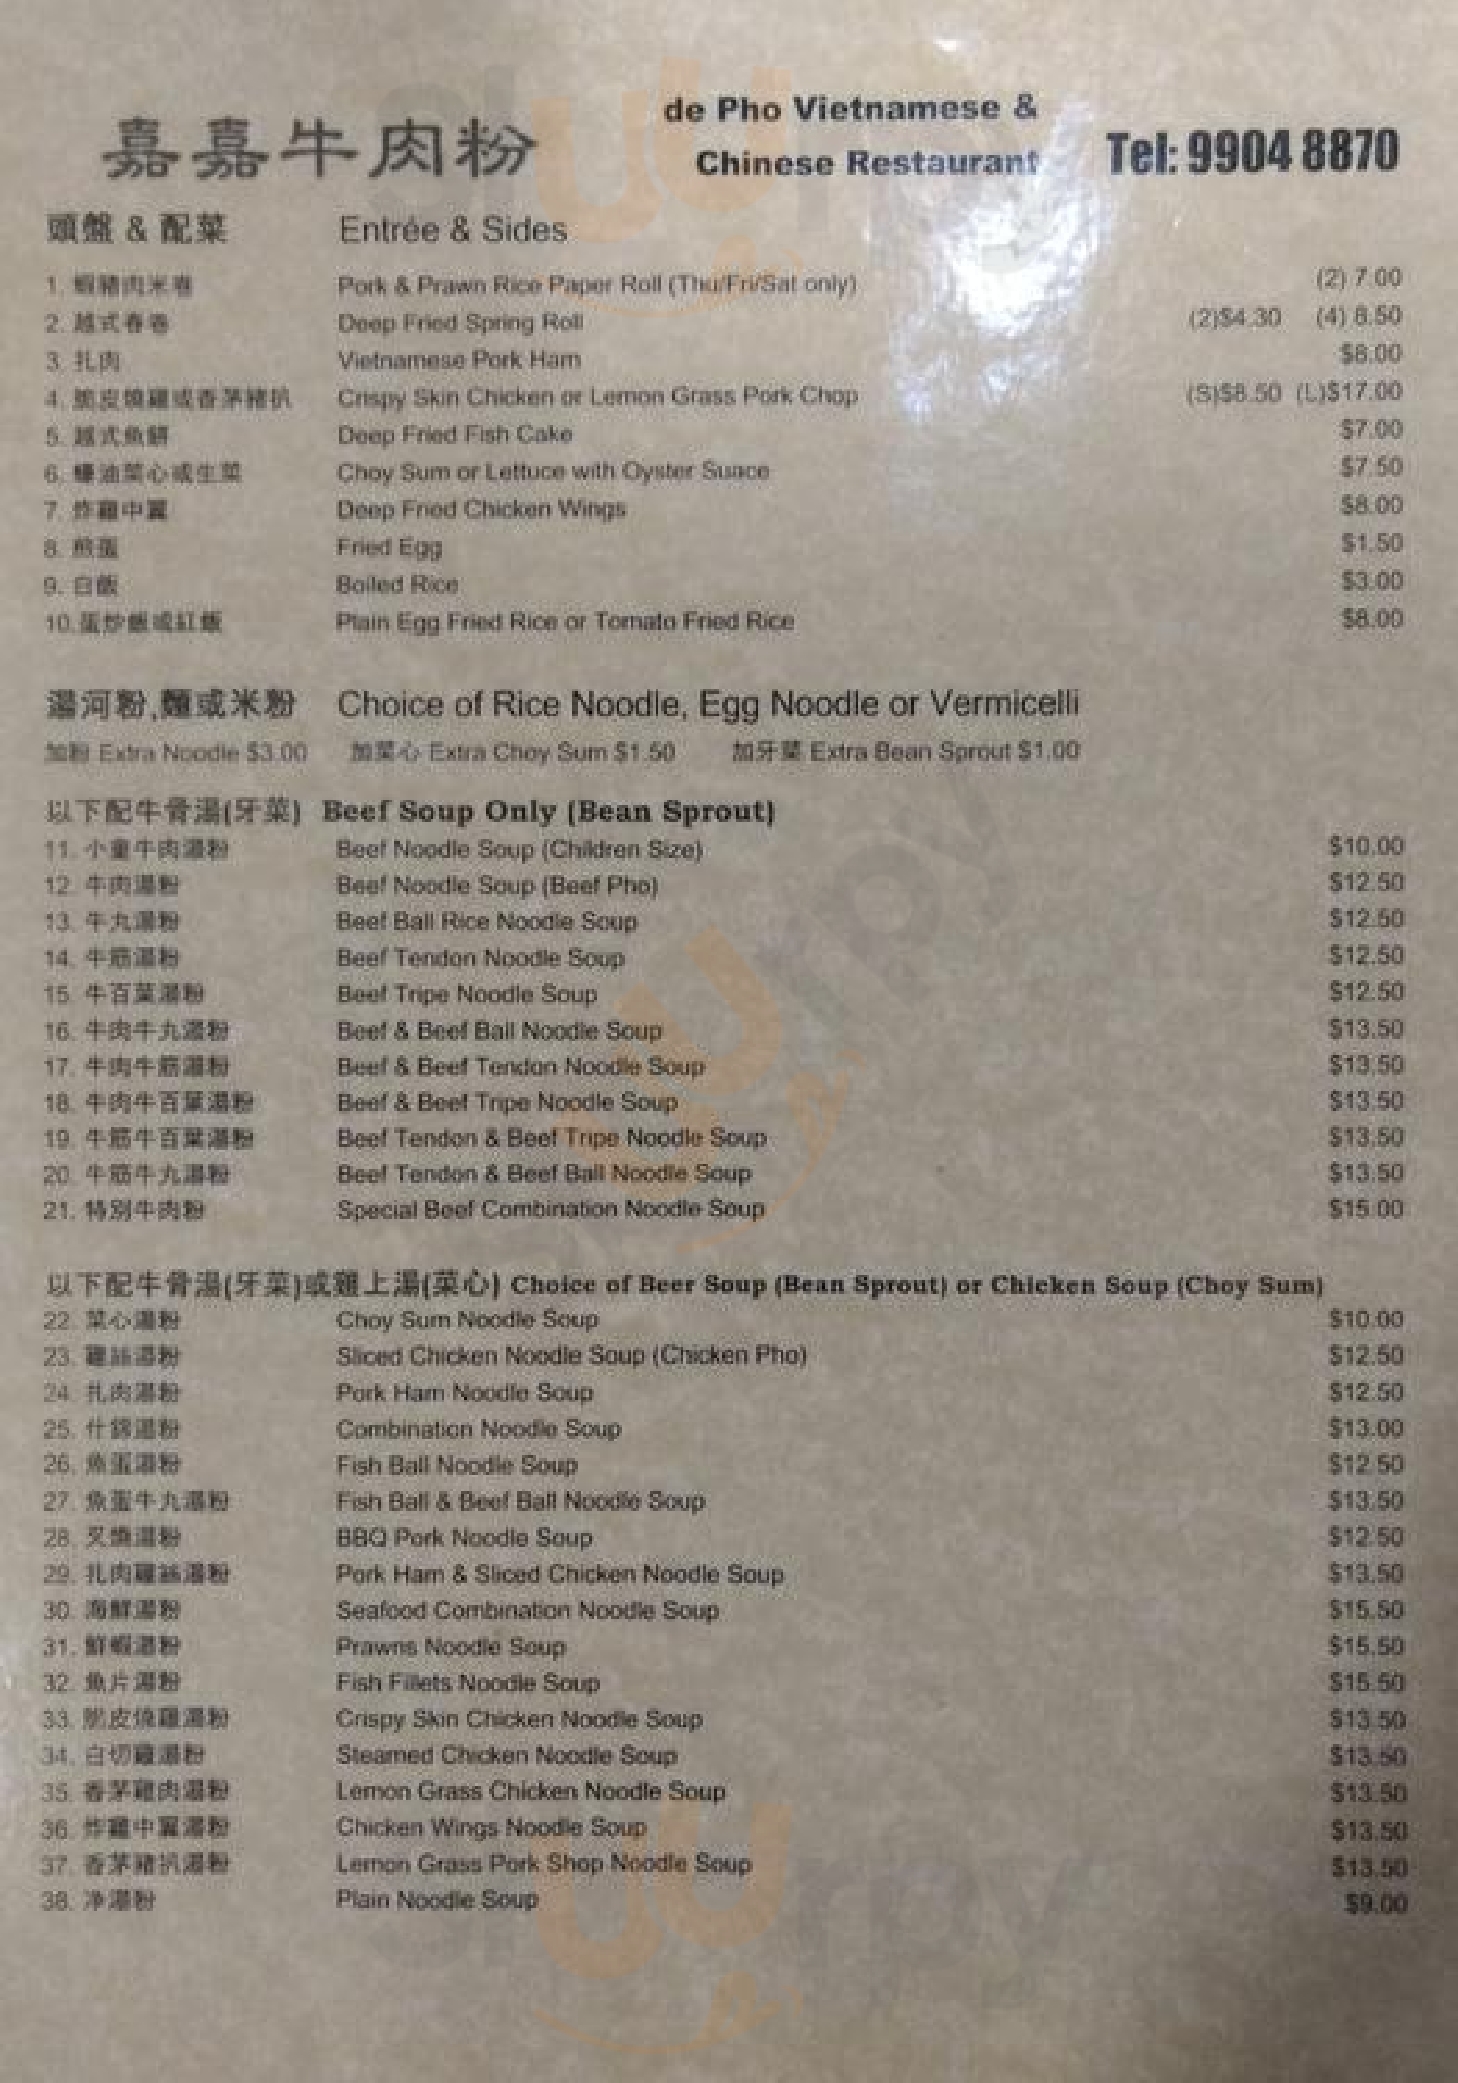 De-pho Vietnamese & Chinese Restaurant Sydney Menu - 1